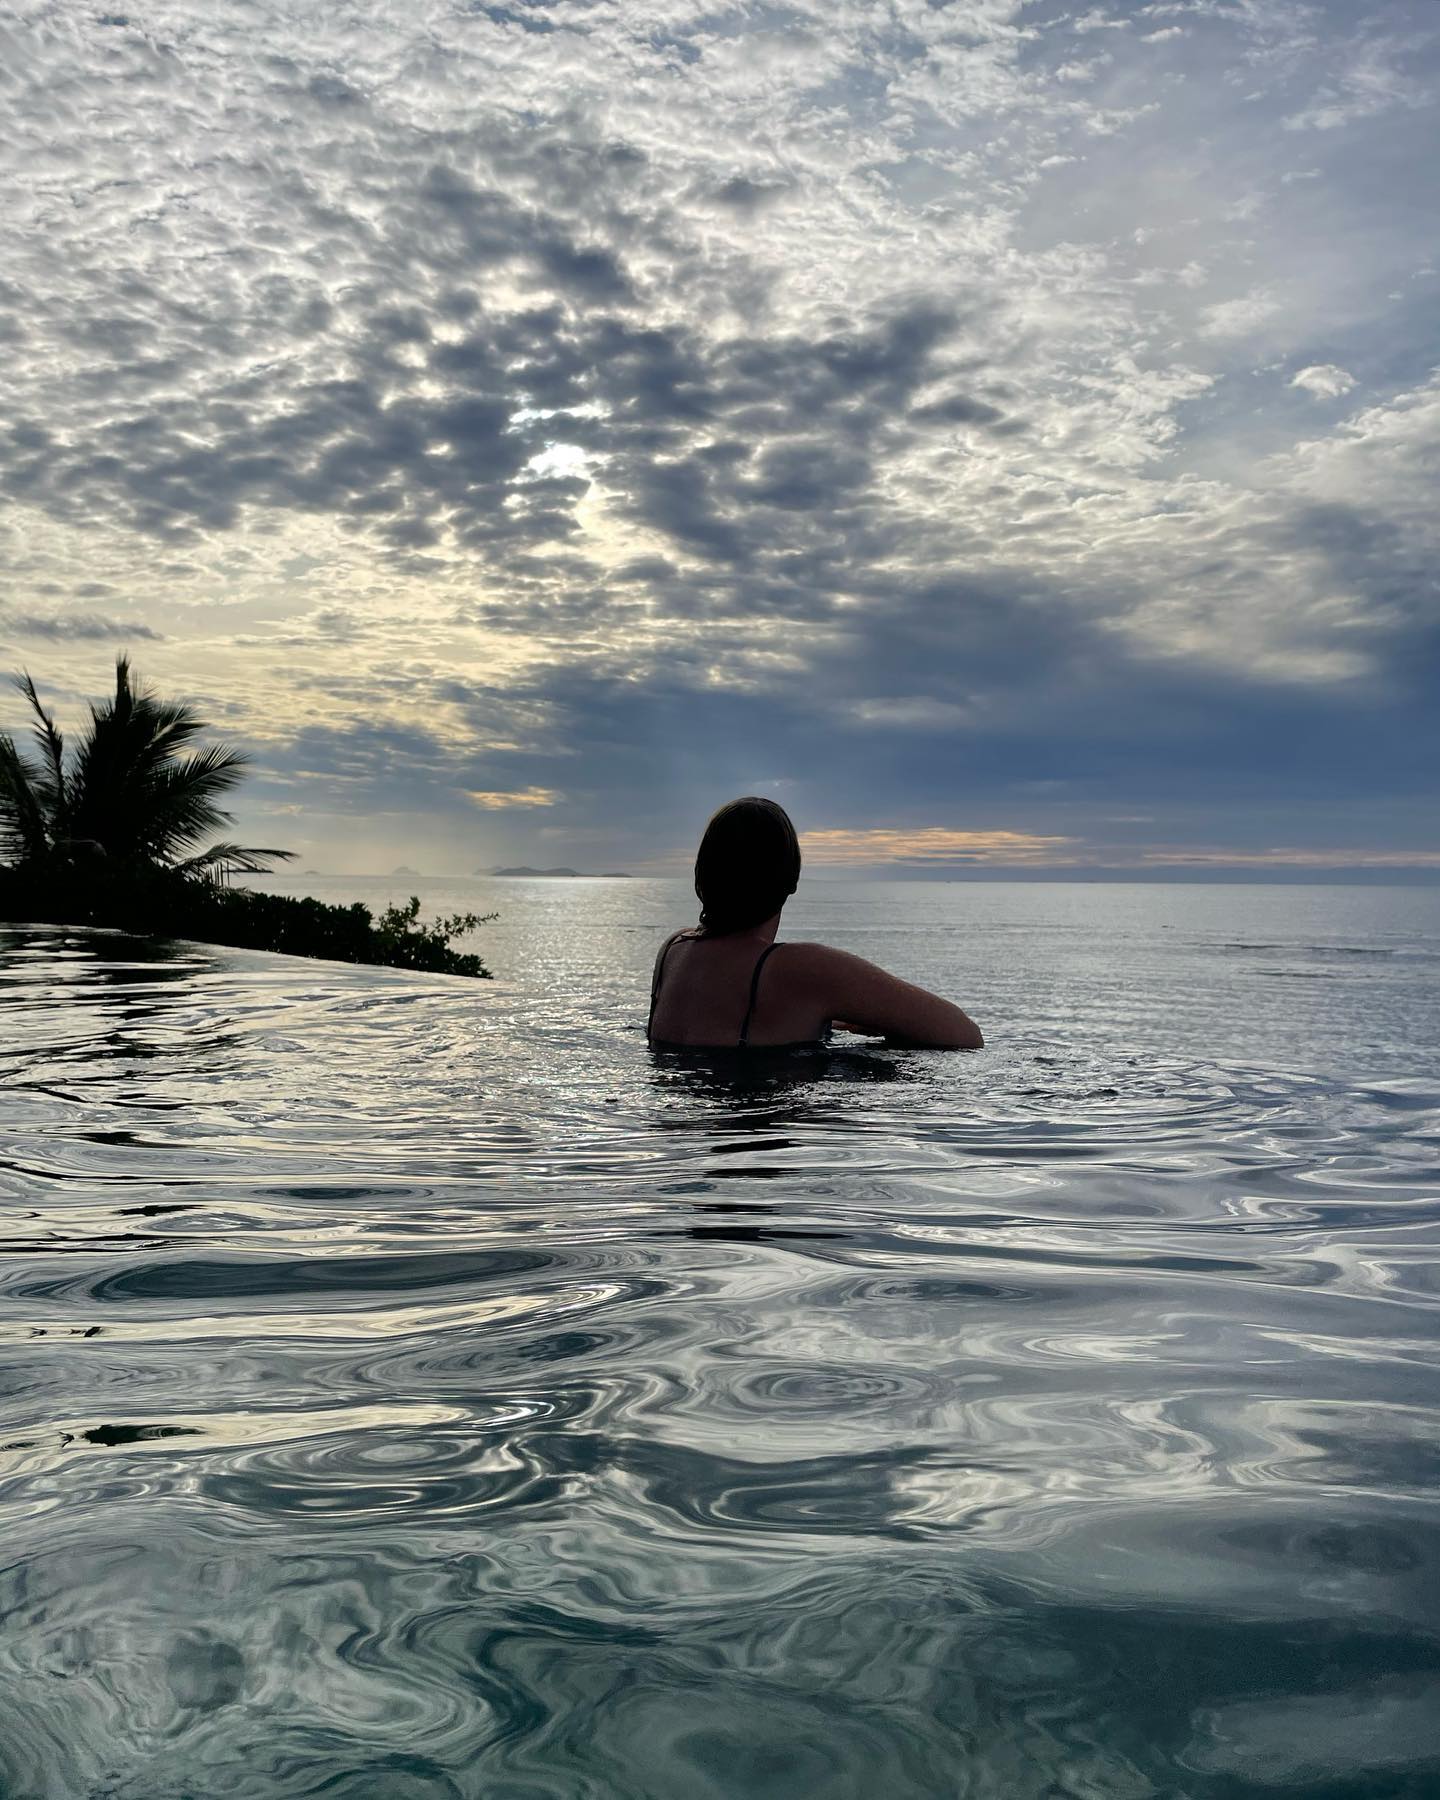 Enjoying the view from this amazing infinity pool at the Malamala Beach Club Island in Fiji 🤩🤩 Who wants to go to Fiji! 🙋🏻‍♀️

#fijiislands #fijitime #tropicalislands #malamalabeachclub #infinitypool #ourbulaspiritawaitsyou #worldtrip #backpacktraveller #fijivacations #wanderlust #dreamdestination #reizen #wereldreiziger #beautifuldestinations #passionfortravel #reiselust #reisinspiratie #reistips #ig_captures